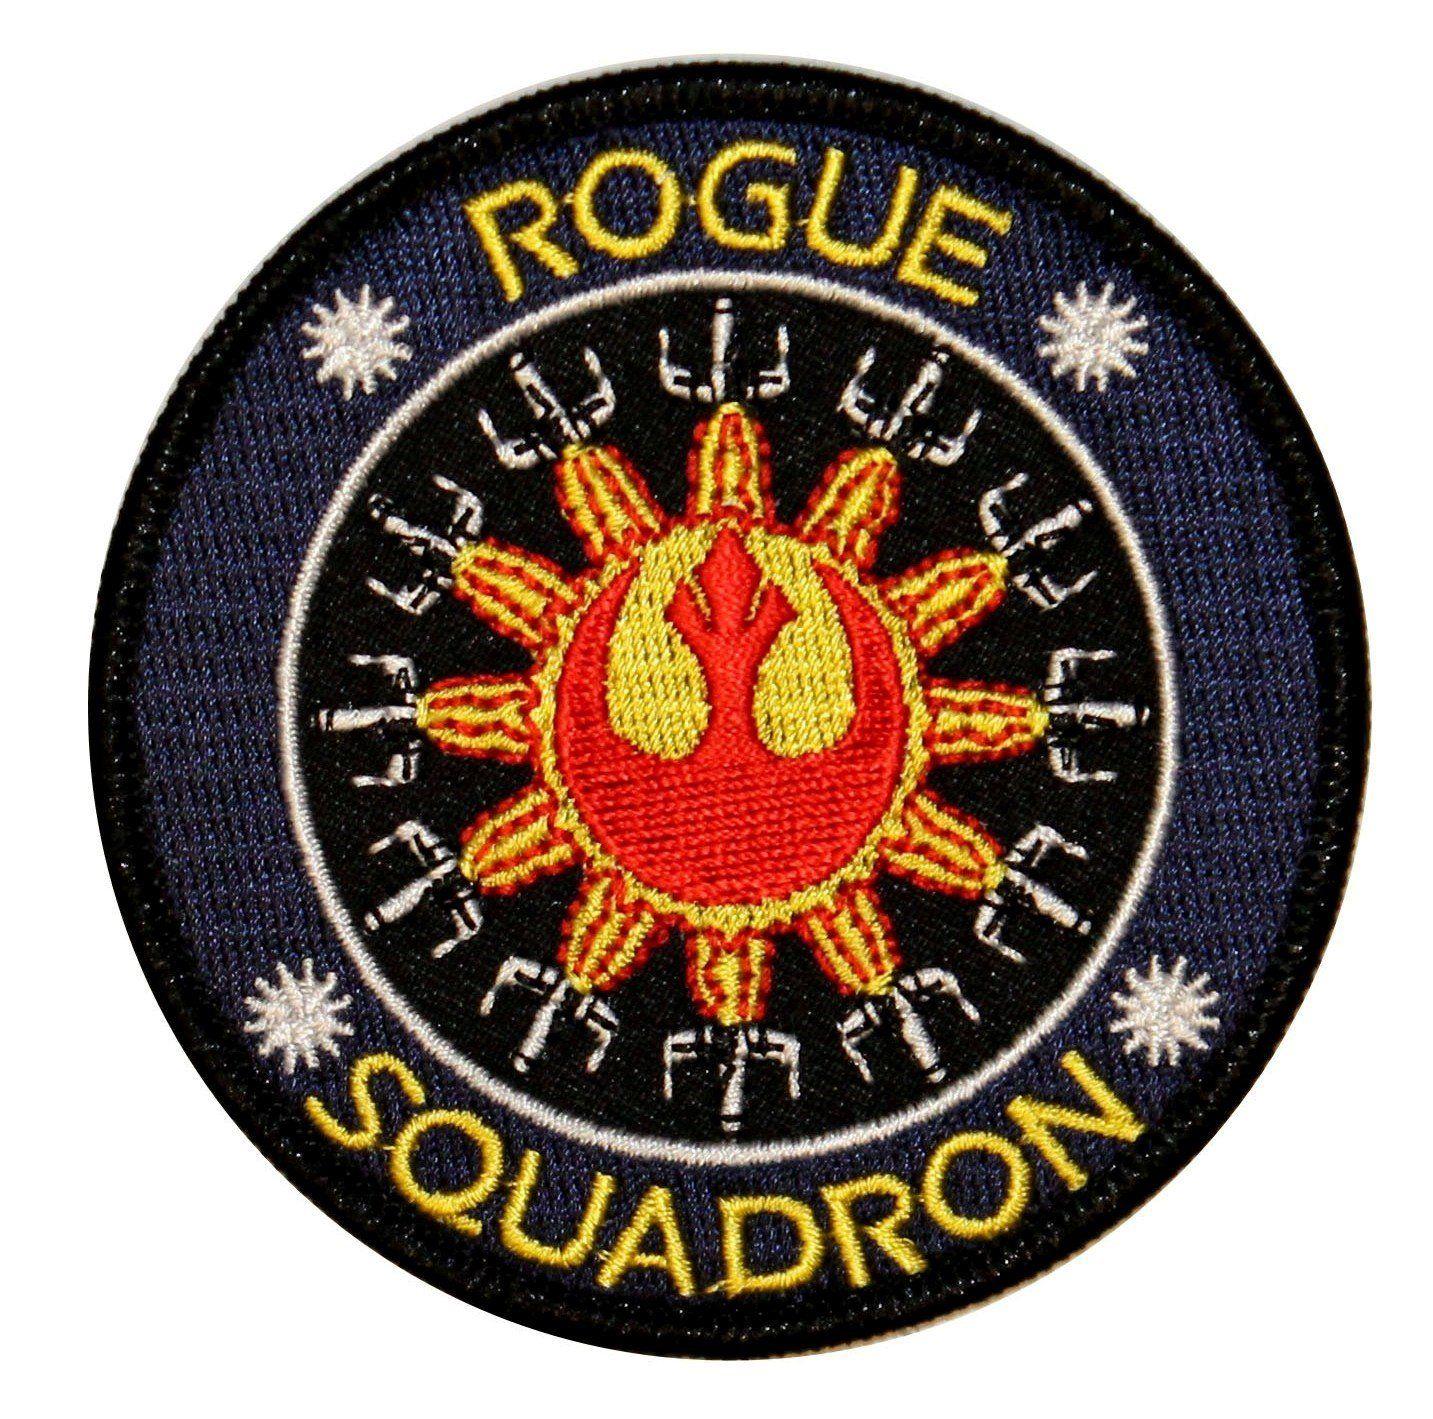 Squadron Logo - Amazon.com: Rogue Squadron Logo X-Wing Rebel Alliance Star Wars ...